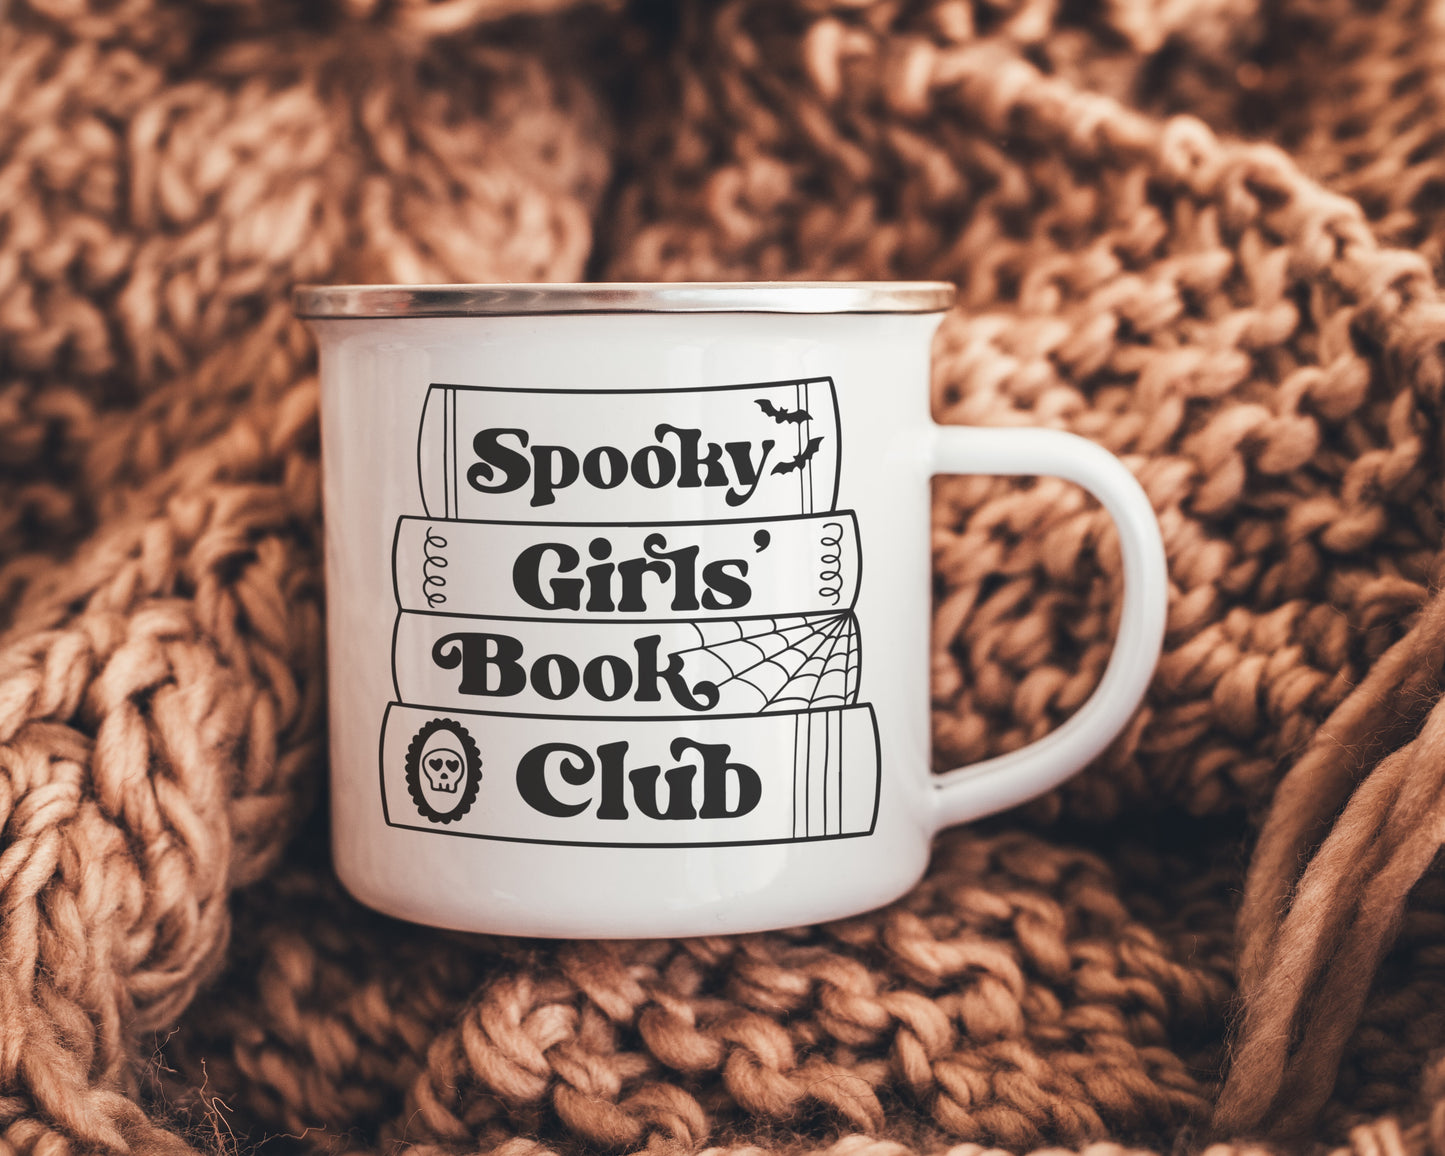 Spooky Girls Book Club SVG Digital Download Design File